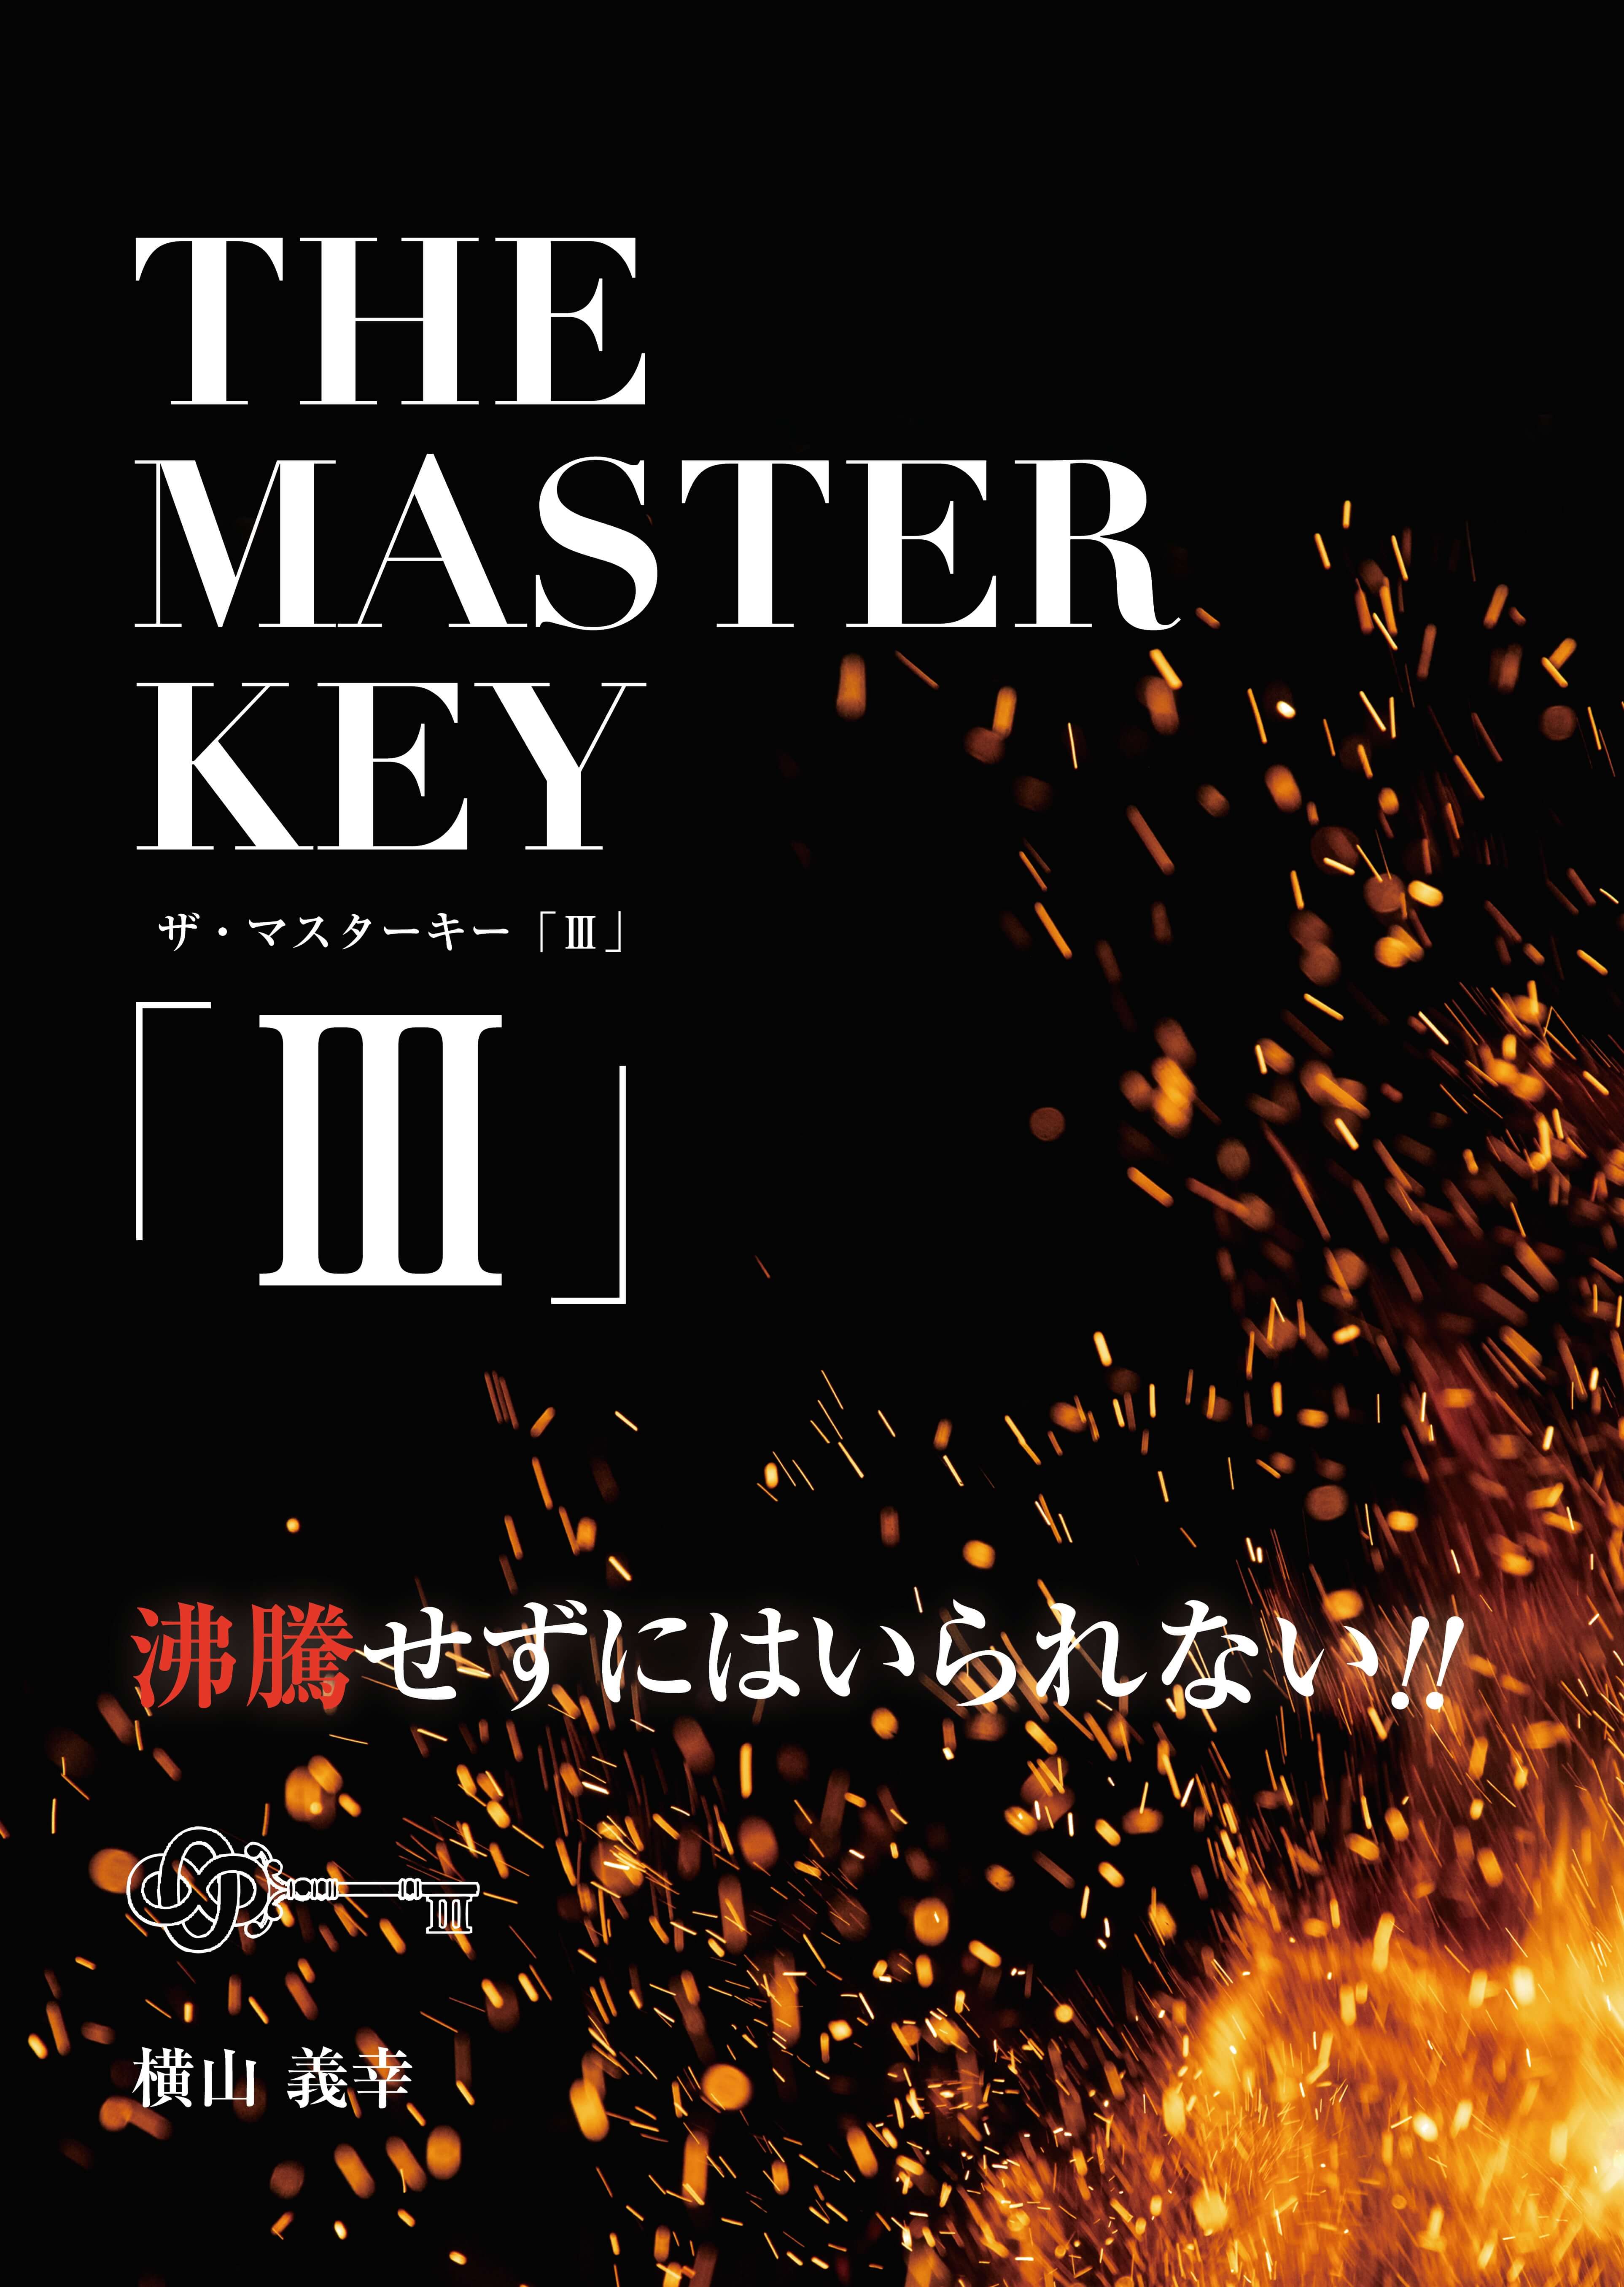 THE MASTER KEY「Ⅲ」